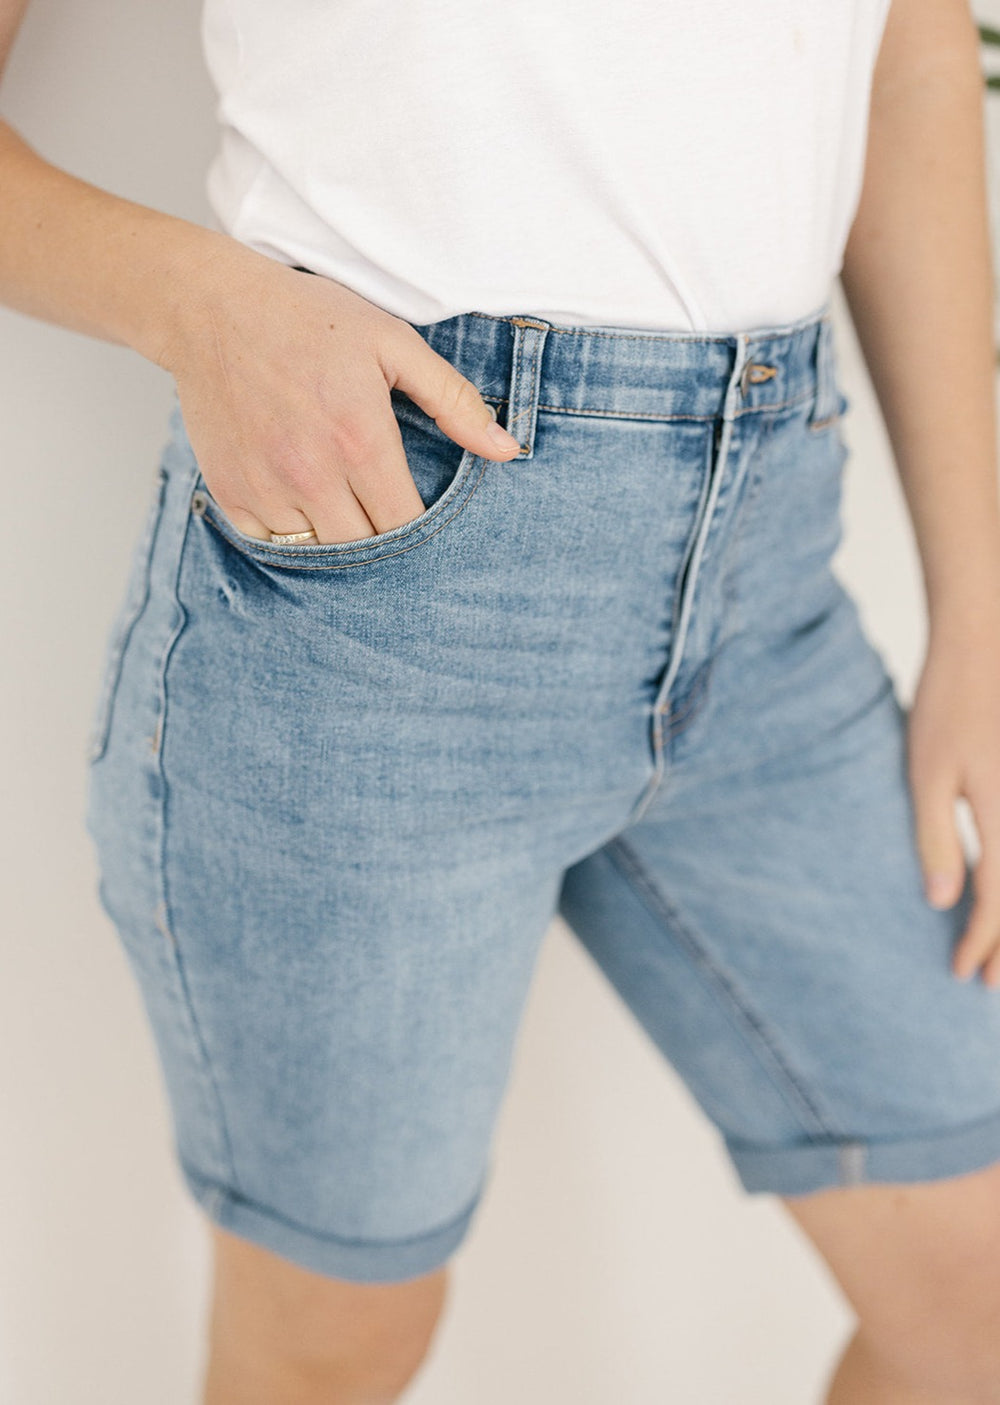 Stretchy Denim Shorts with pockets